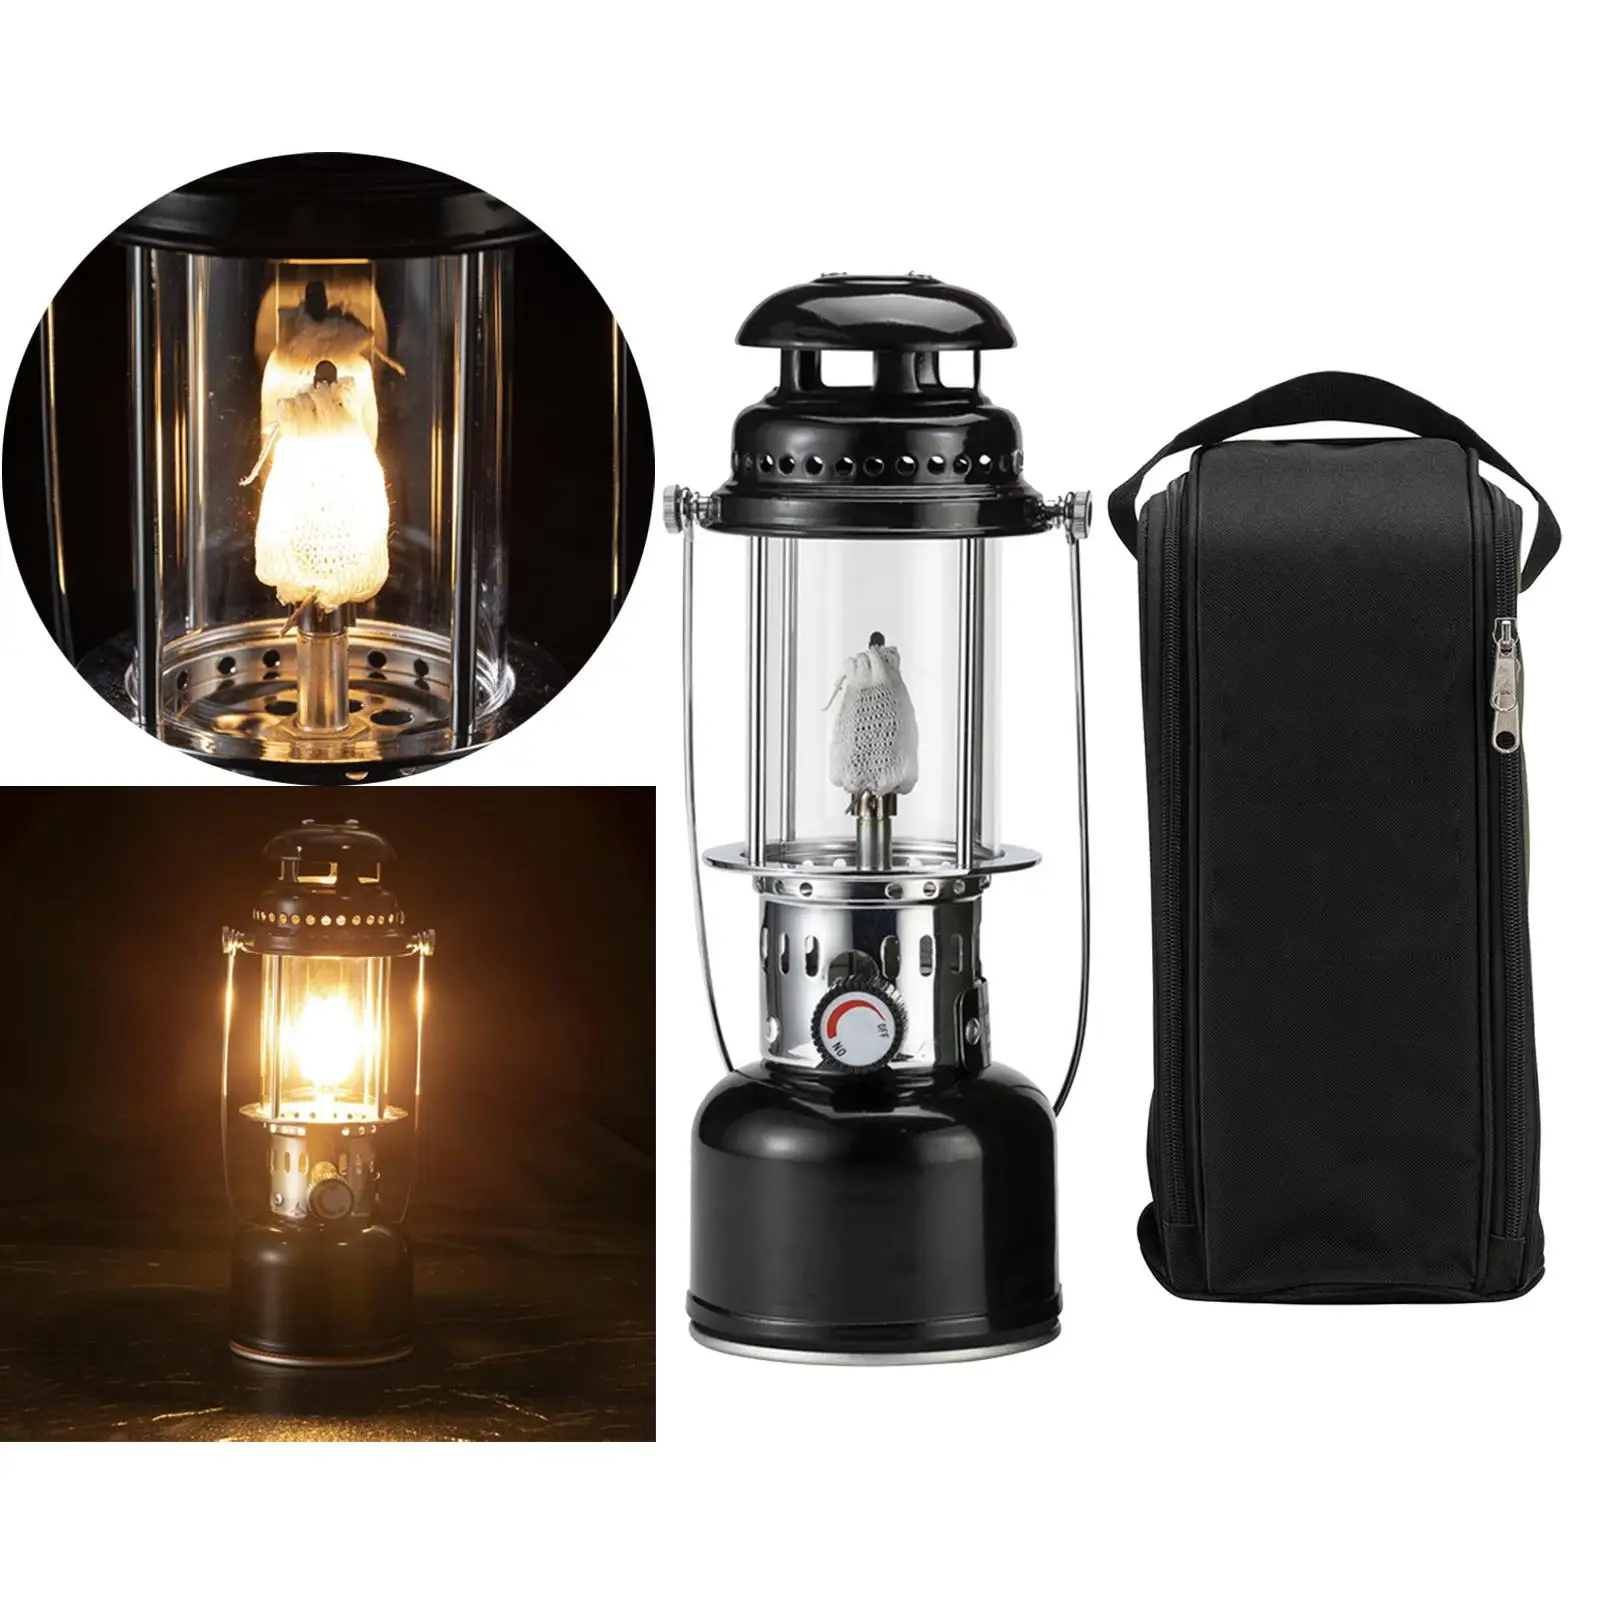 Outdoor Propane Gas Lantern Camping Hiking Light Kerosene Oil Lamp Lighting Table Decoration